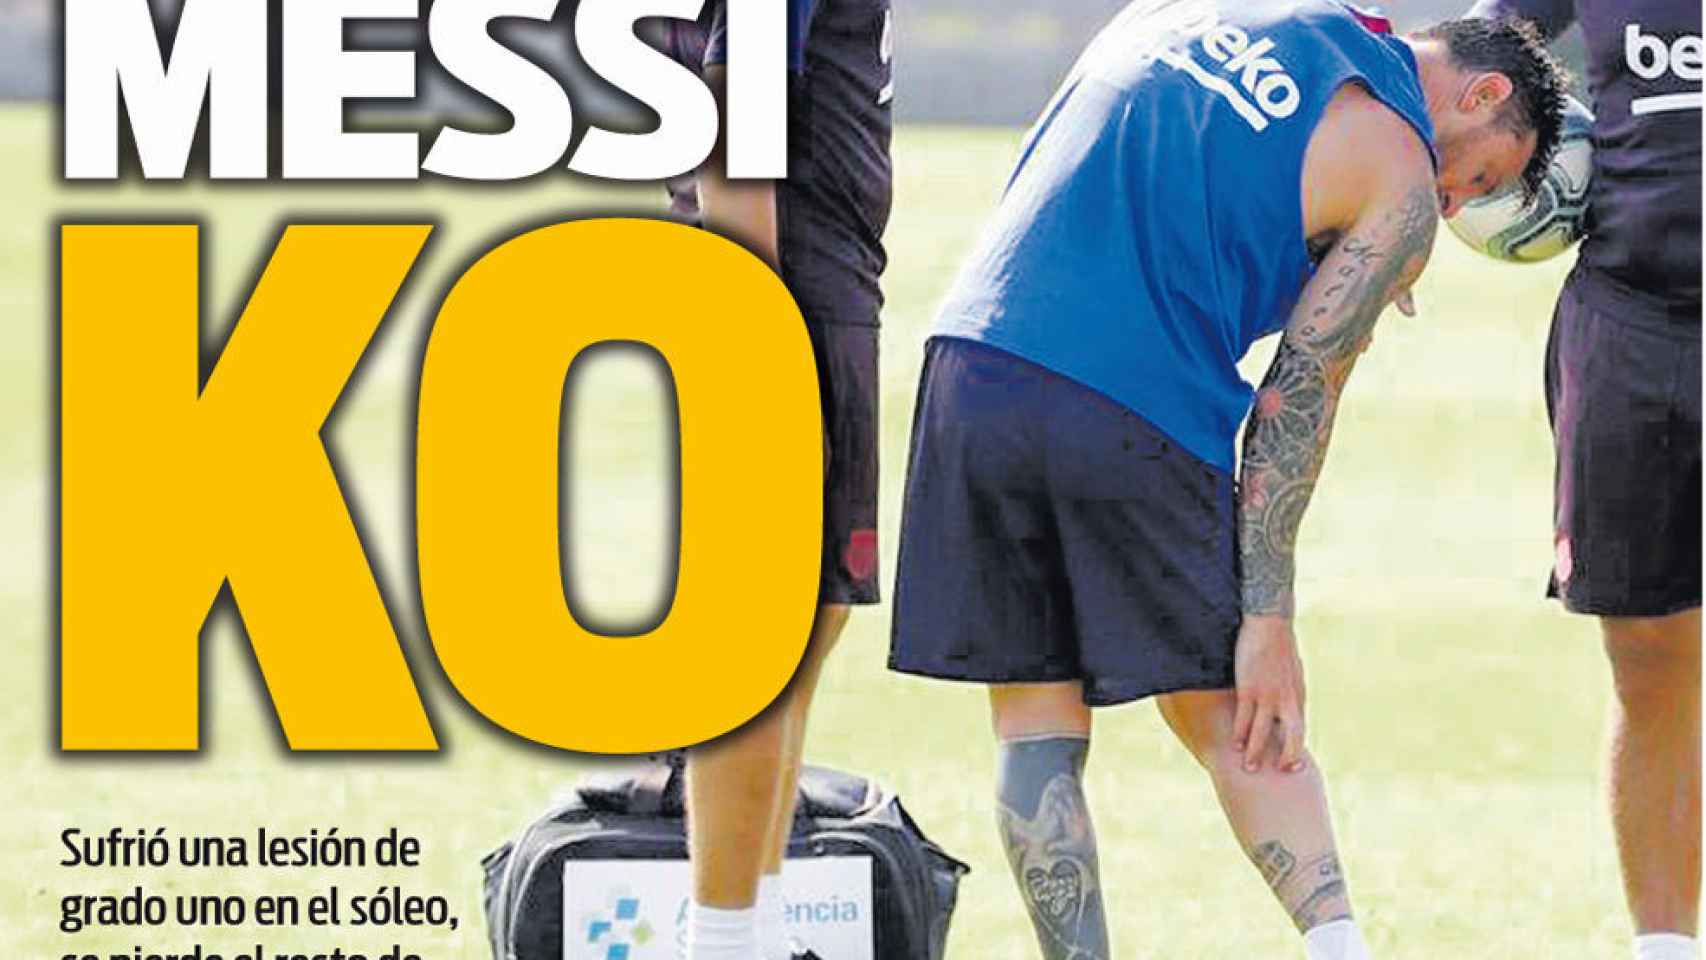 La portada del diario Sport (06/08/2019)